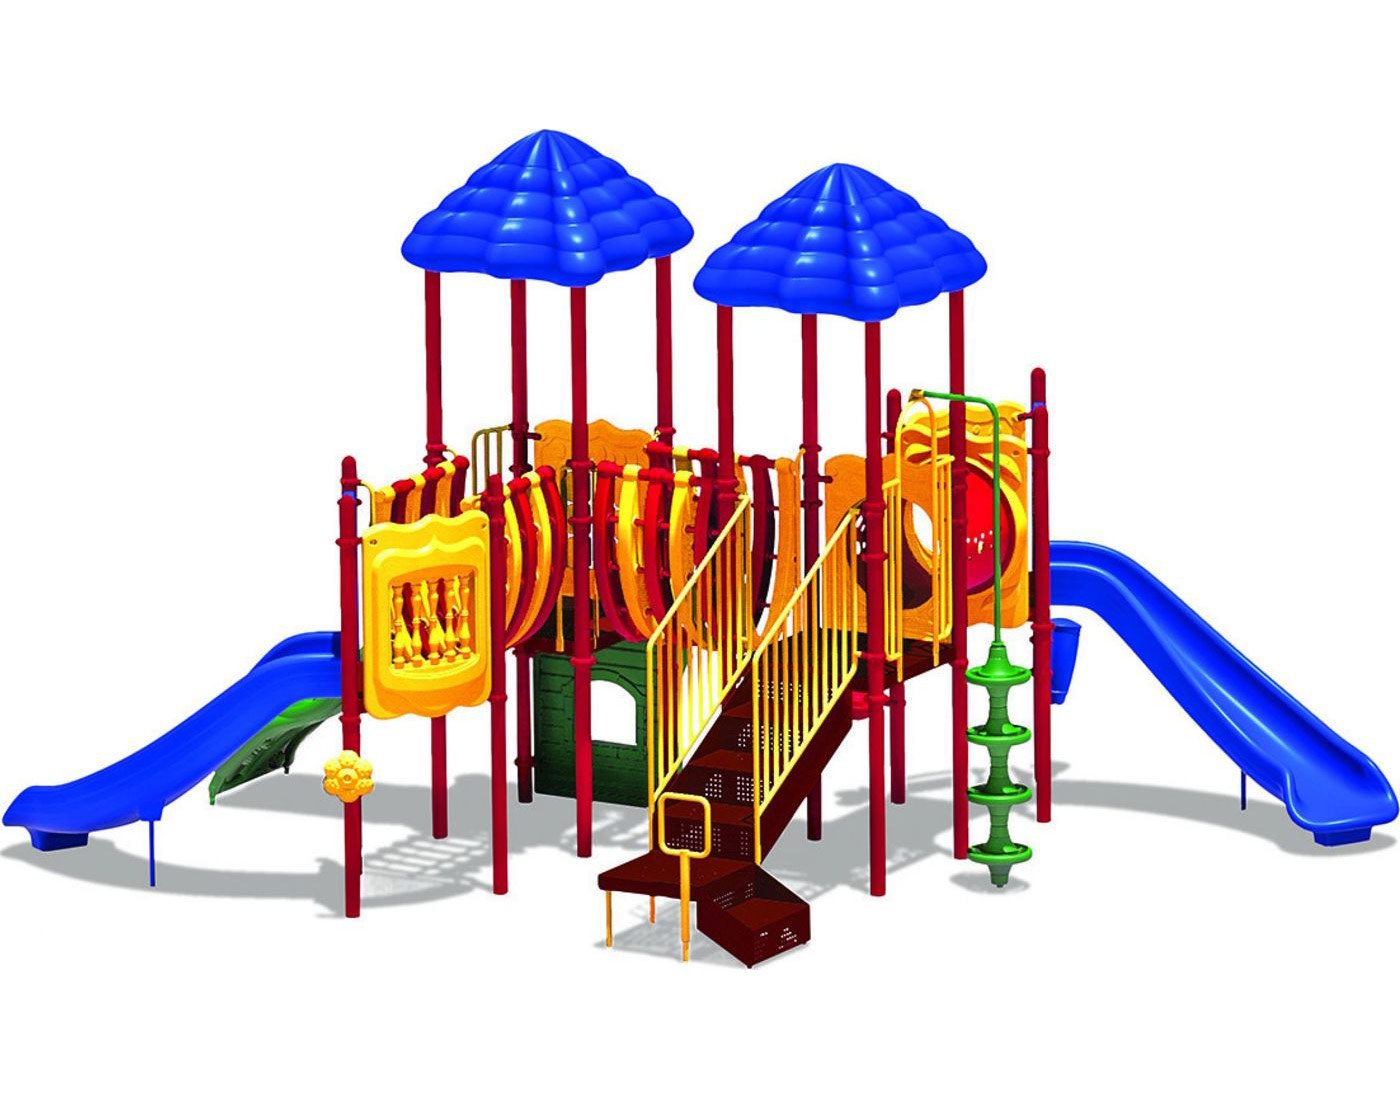 Pike's Peak Play System  | WillyGoat Playground & Park Equipment